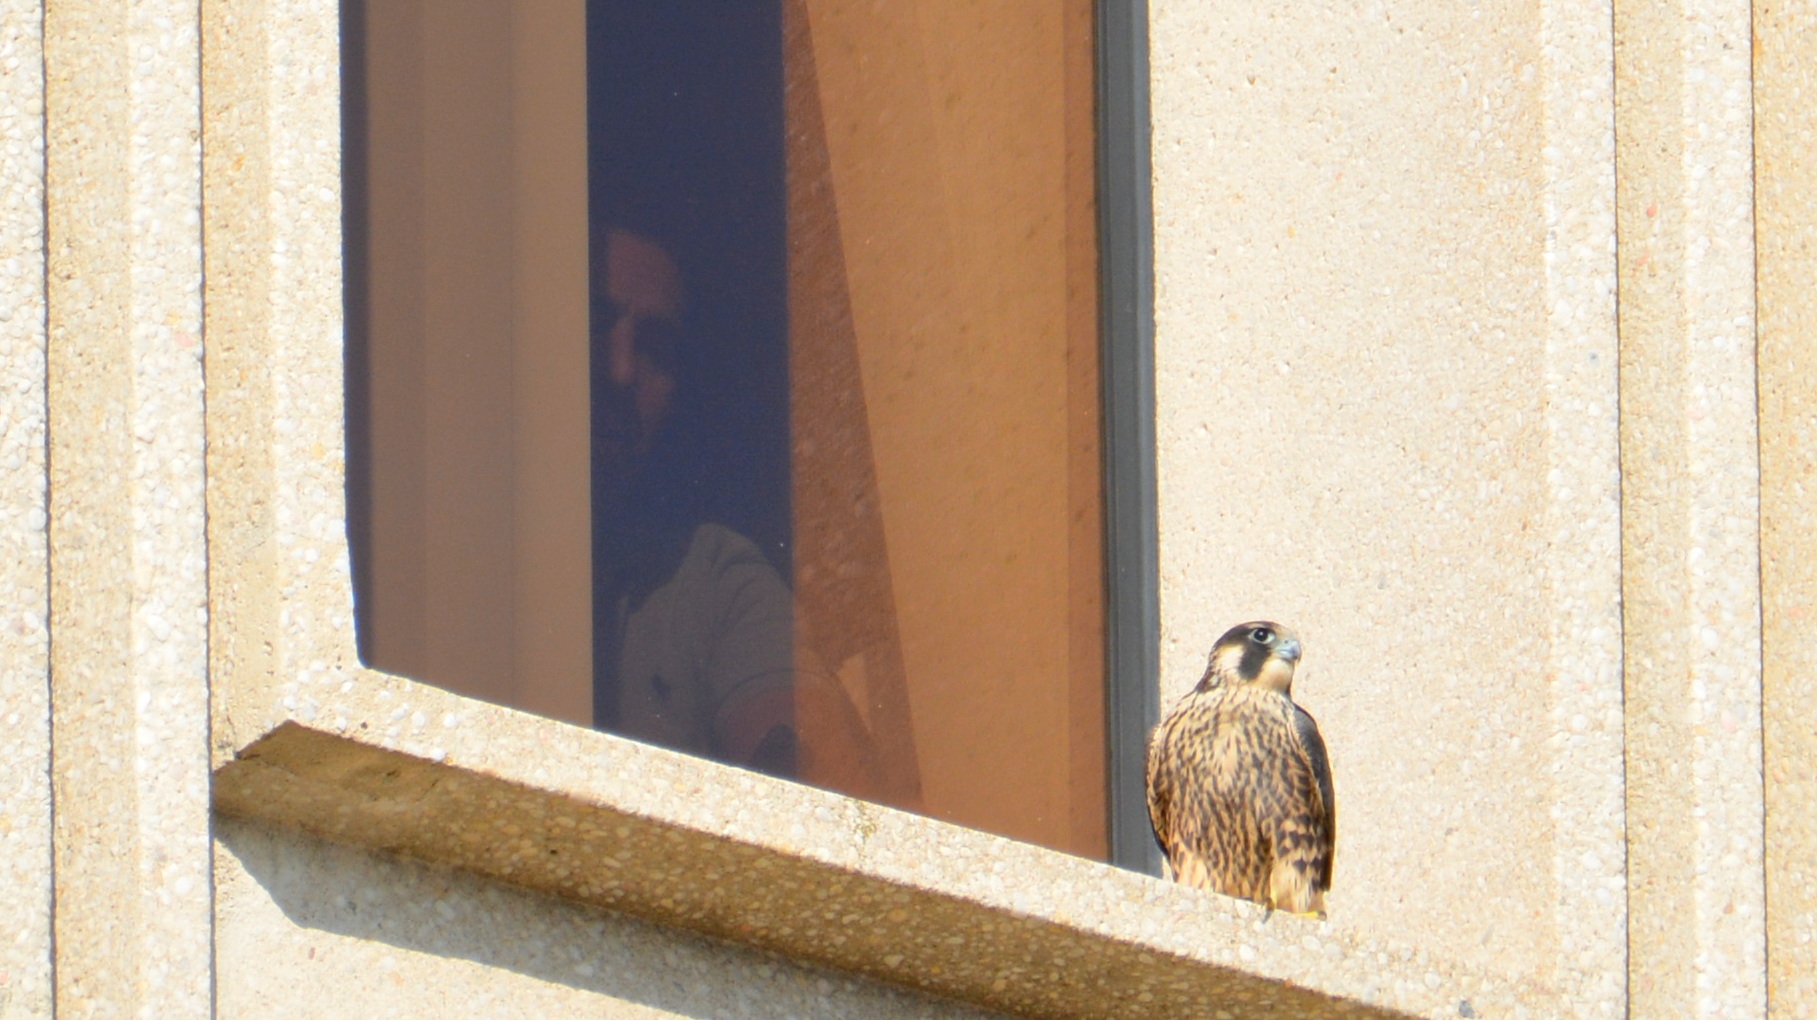 Having a visitor on the windowsill 